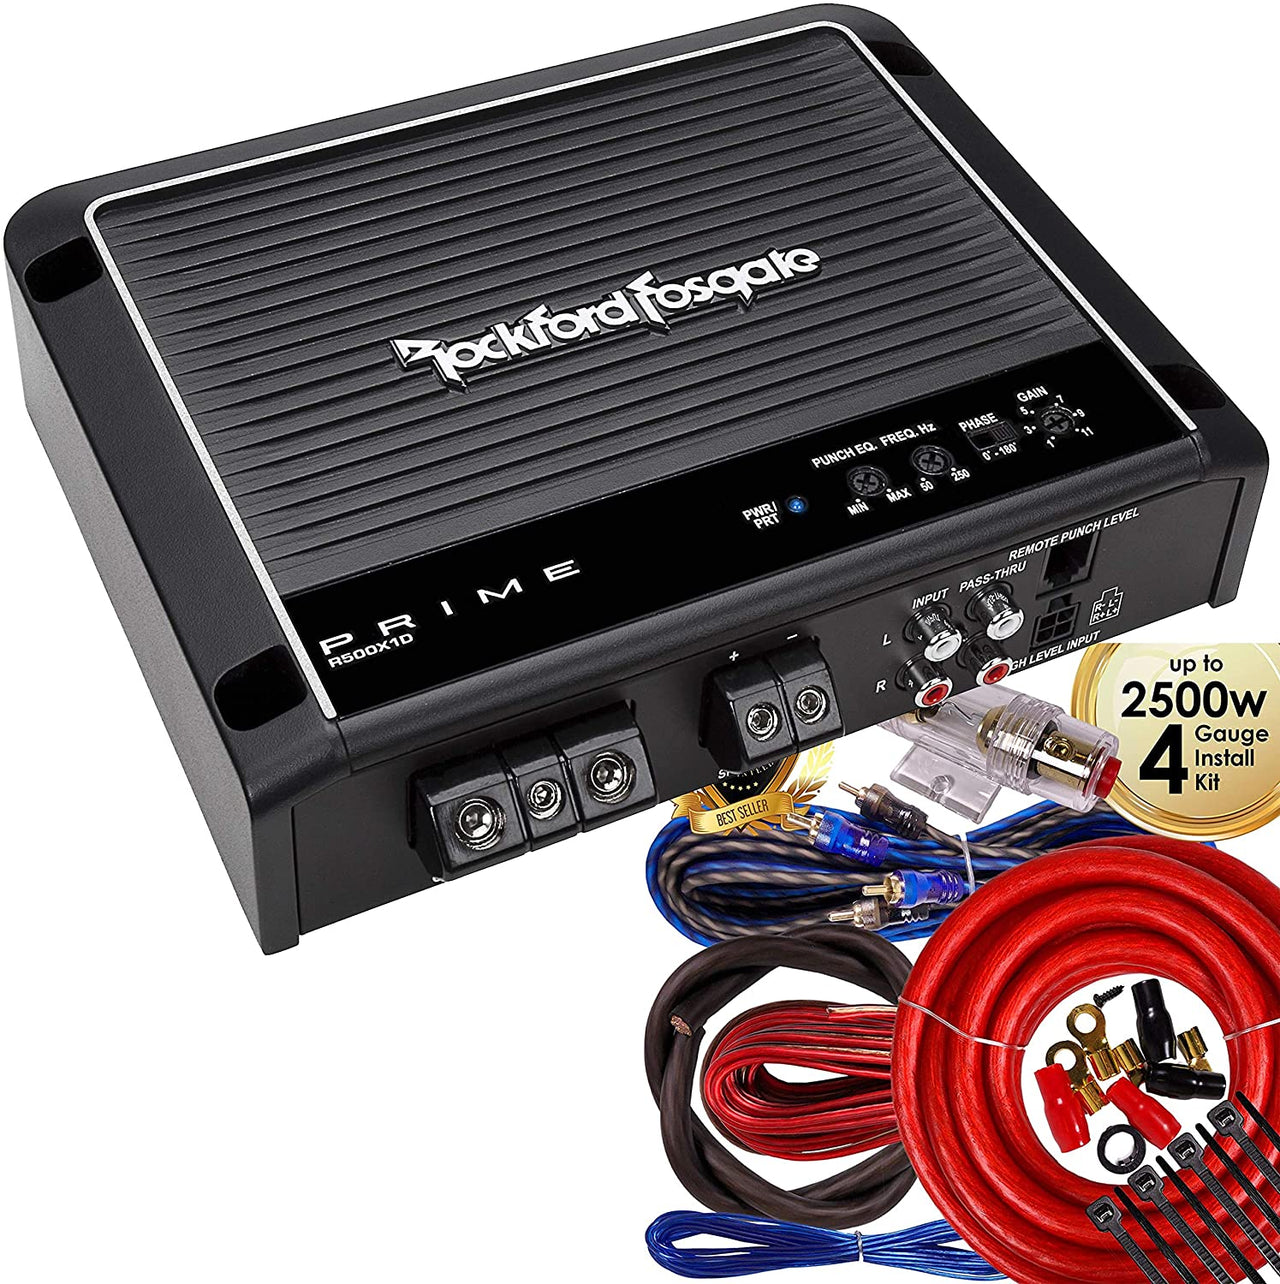 Rockford Fosgate Prime R500X1D 500 Watt RMS Mono Car Class D Amplifier + 4 Gauge Amplifier Kit